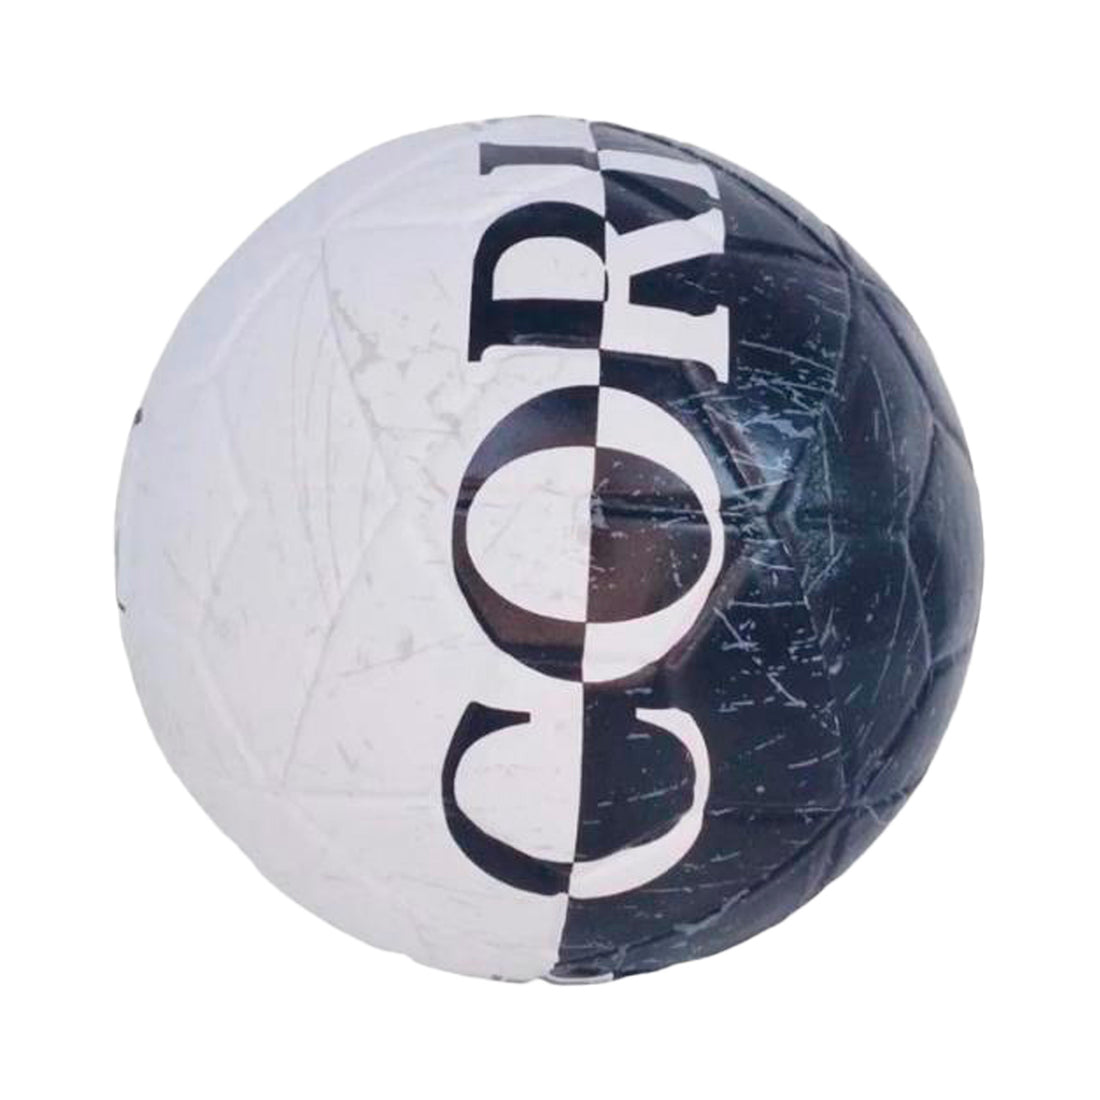 Mini Bola de Futebol De Campo Corinthians - Futebol e Magia